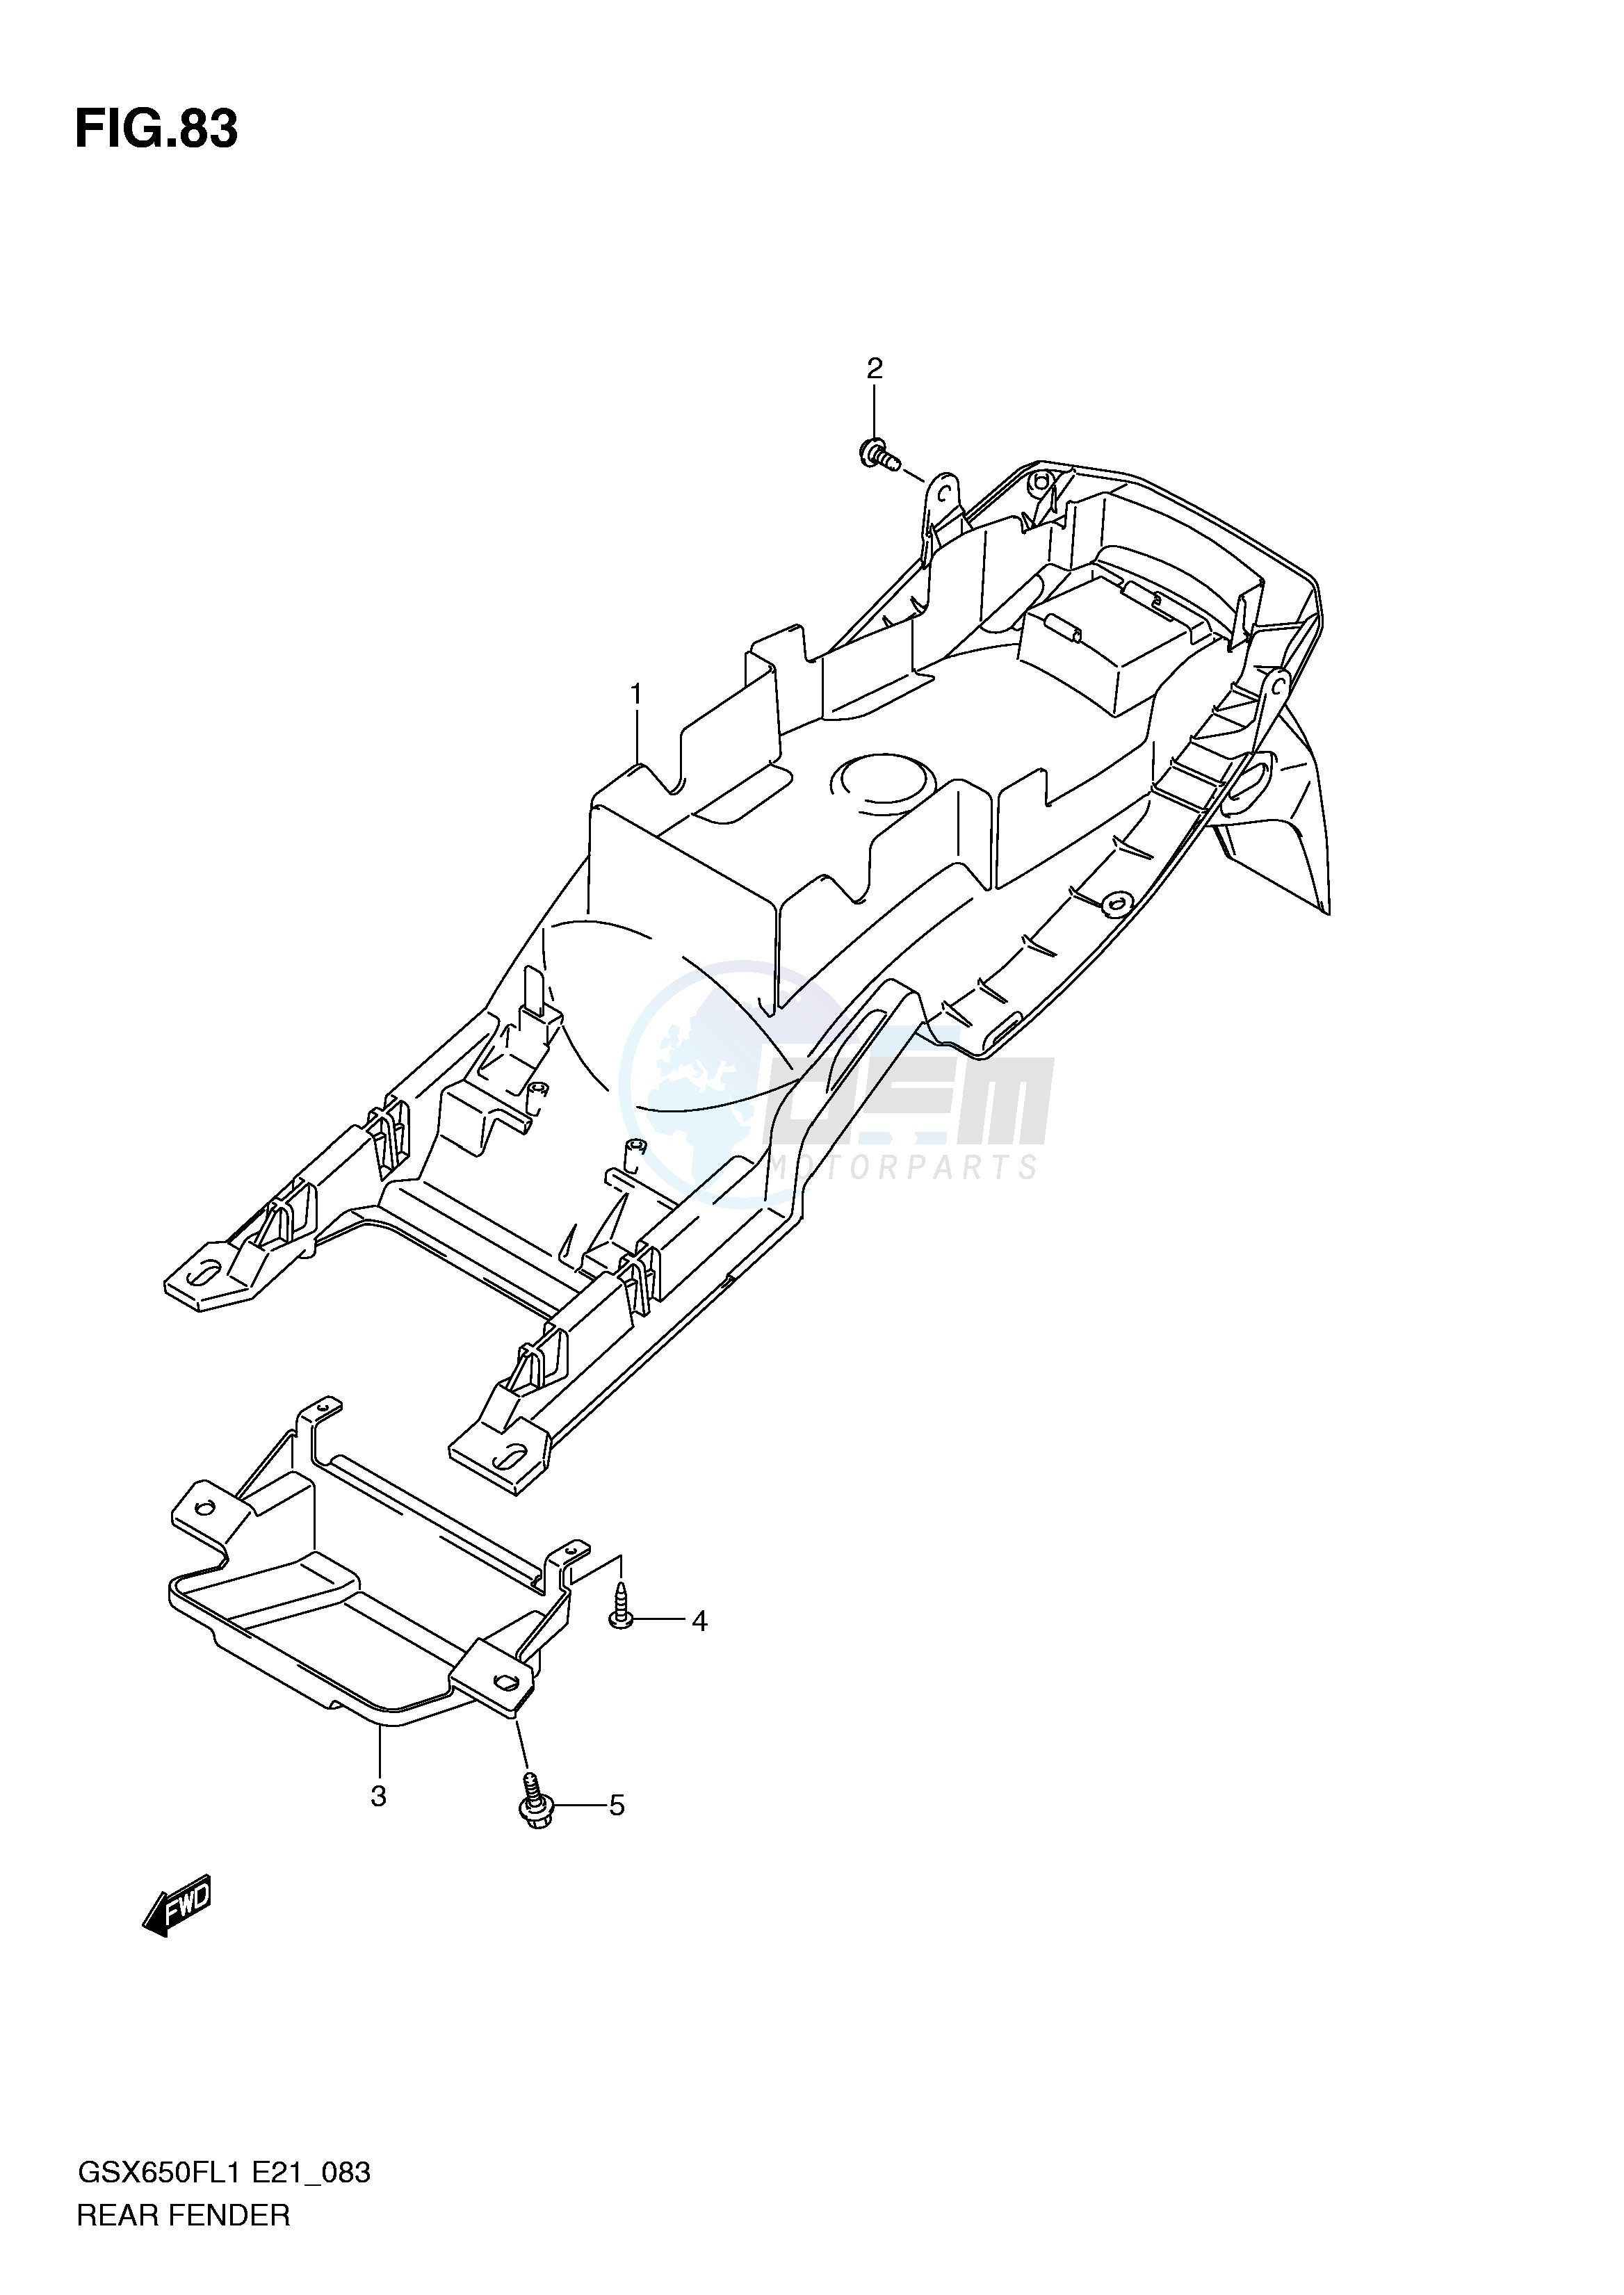 REAR FENDER (GSX650FL1 E21) blueprint